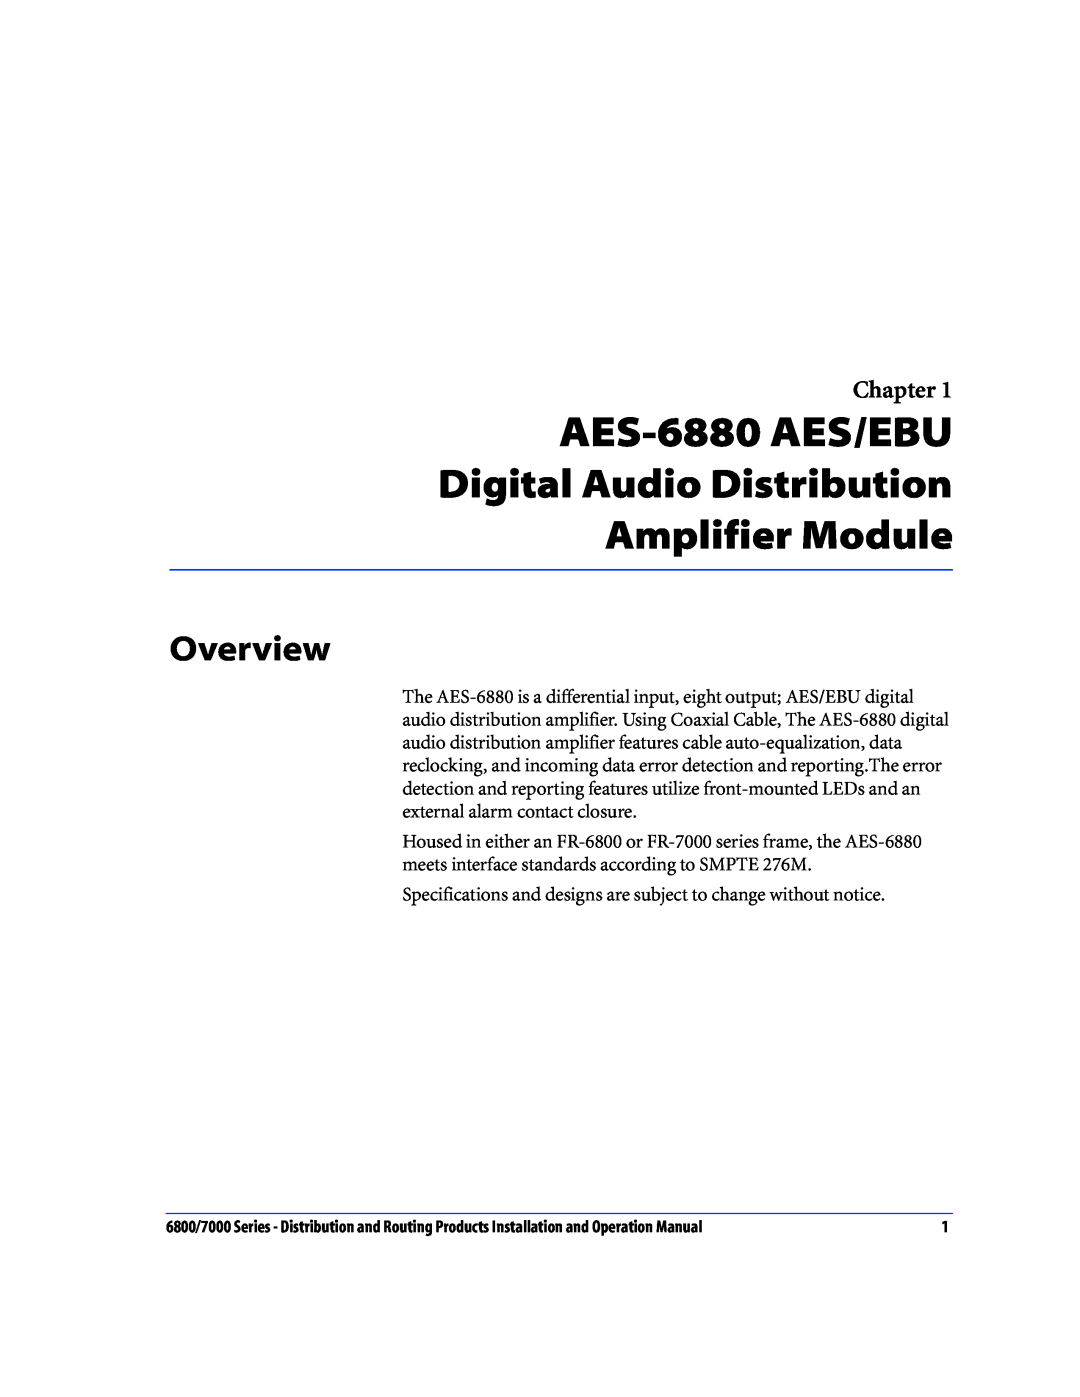 Nokia 6800 Series, 7000 Series AES-6880 AES/EBU, Overview, Chapter, Digital Audio Distribution Amplifier Module 